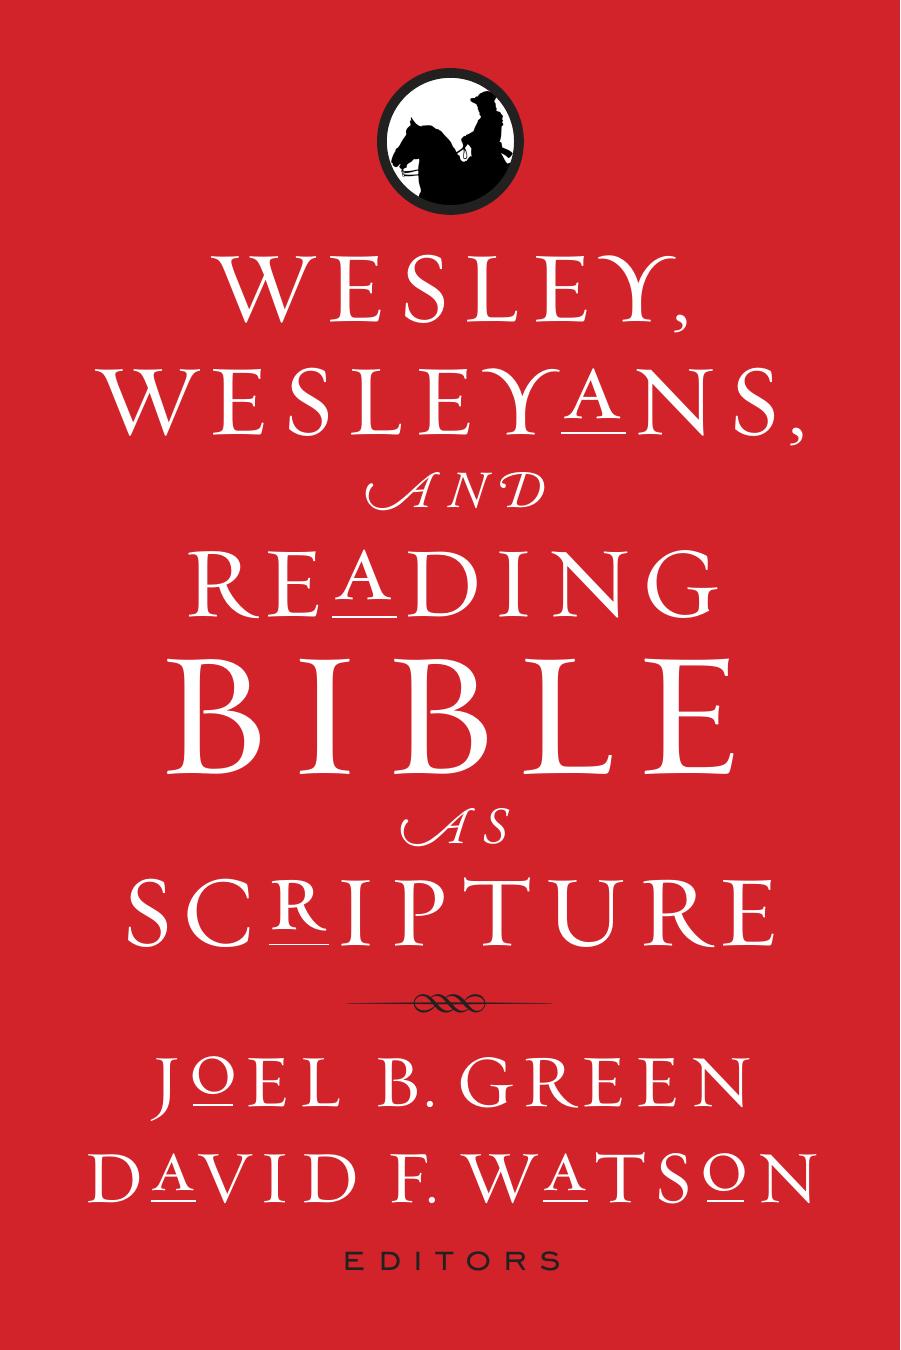 Wesley, Wesleyans, and Reading Bible As Scripture by Joel B. Green; David F. Watson